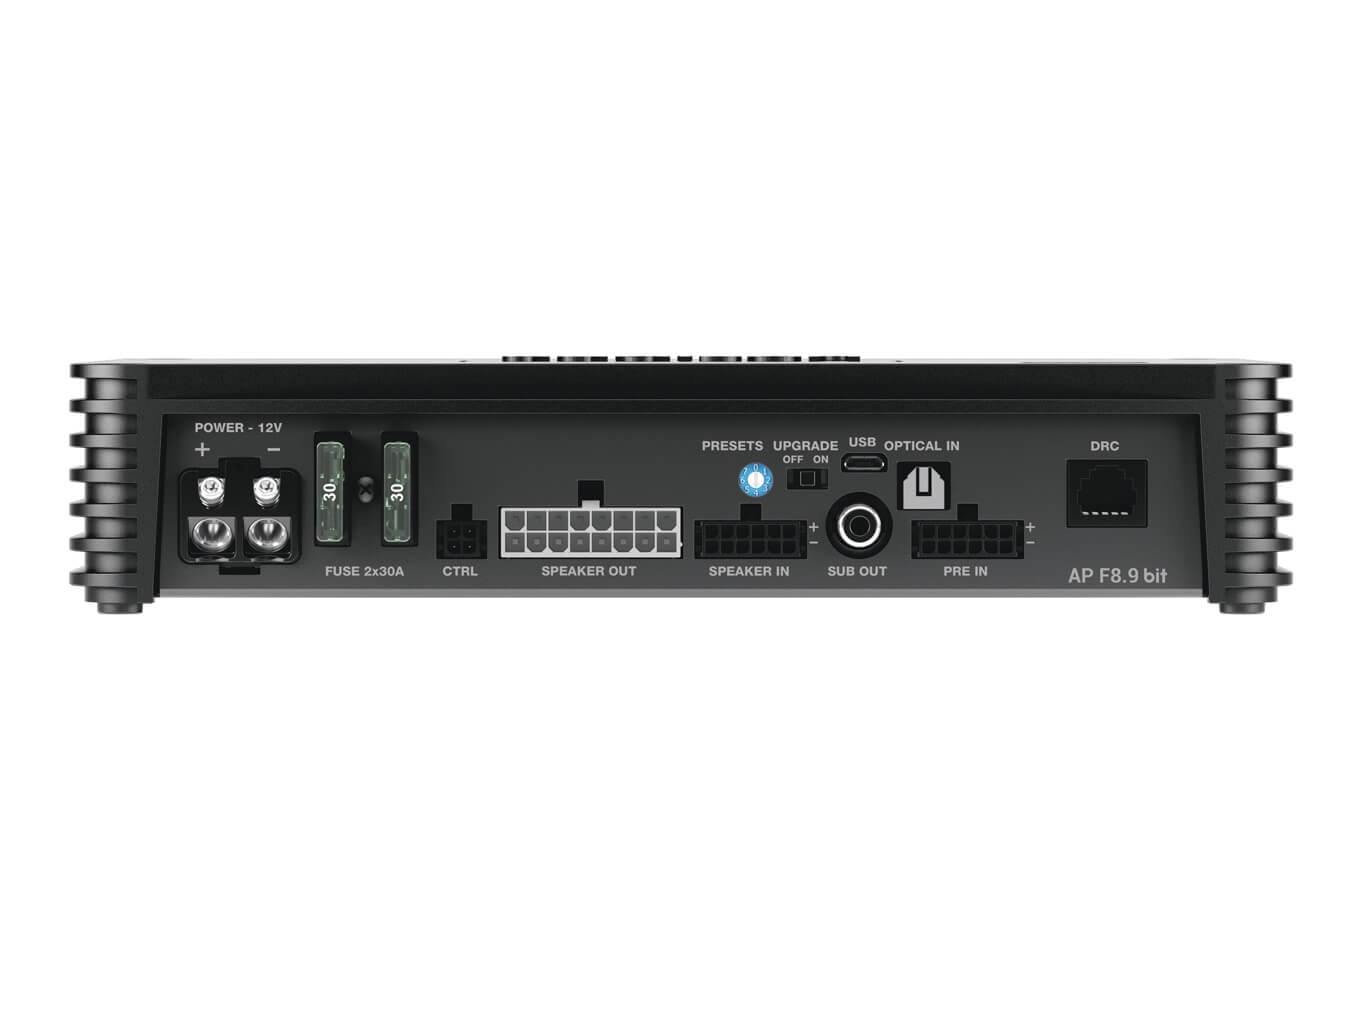 Audison Prima Forza AP F8.9 bit - 24v - Amplifier - Control Panel